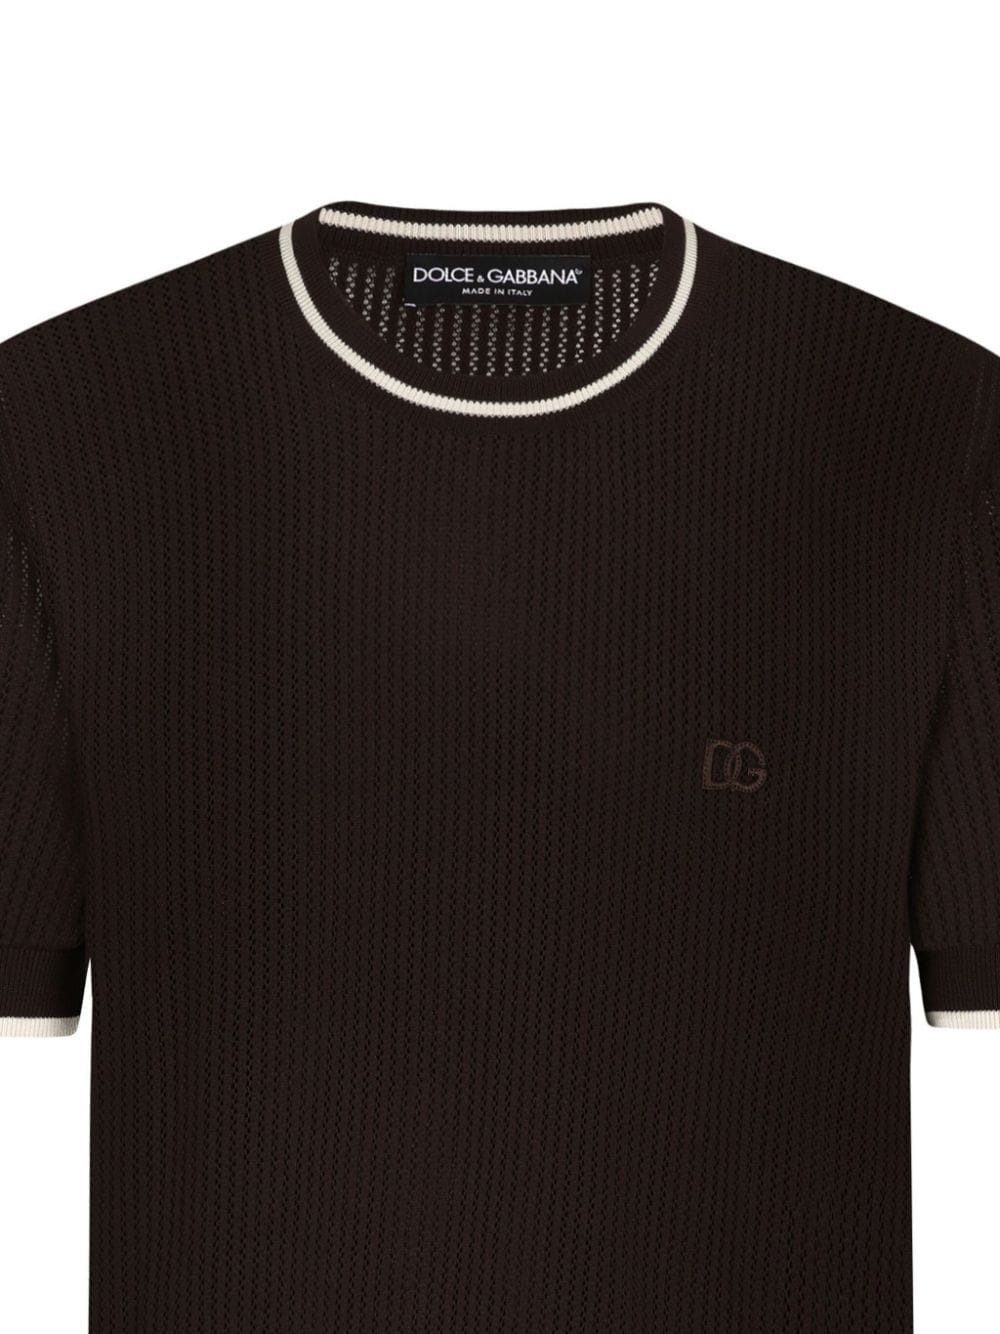 Dolce & Gabbana DG-logo cotton T-shirt - Bruin